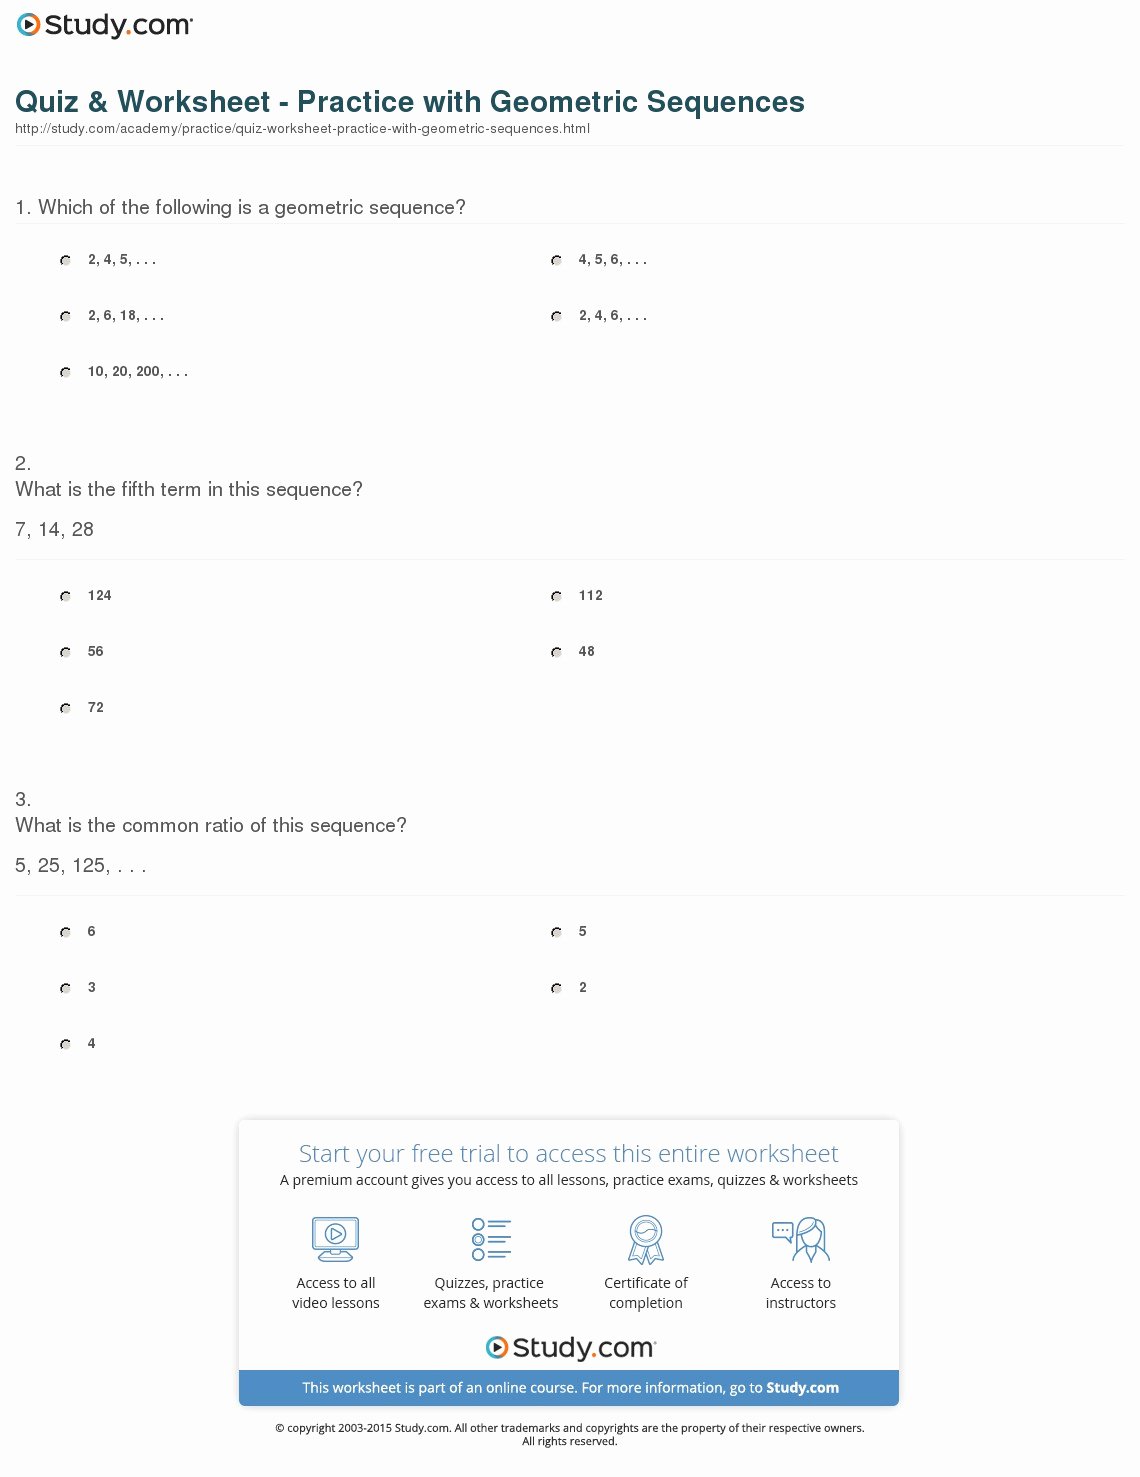 Geometric Sequences Worksheet Answers Elegant Quiz &amp; Worksheet Practice with Geometric Sequences